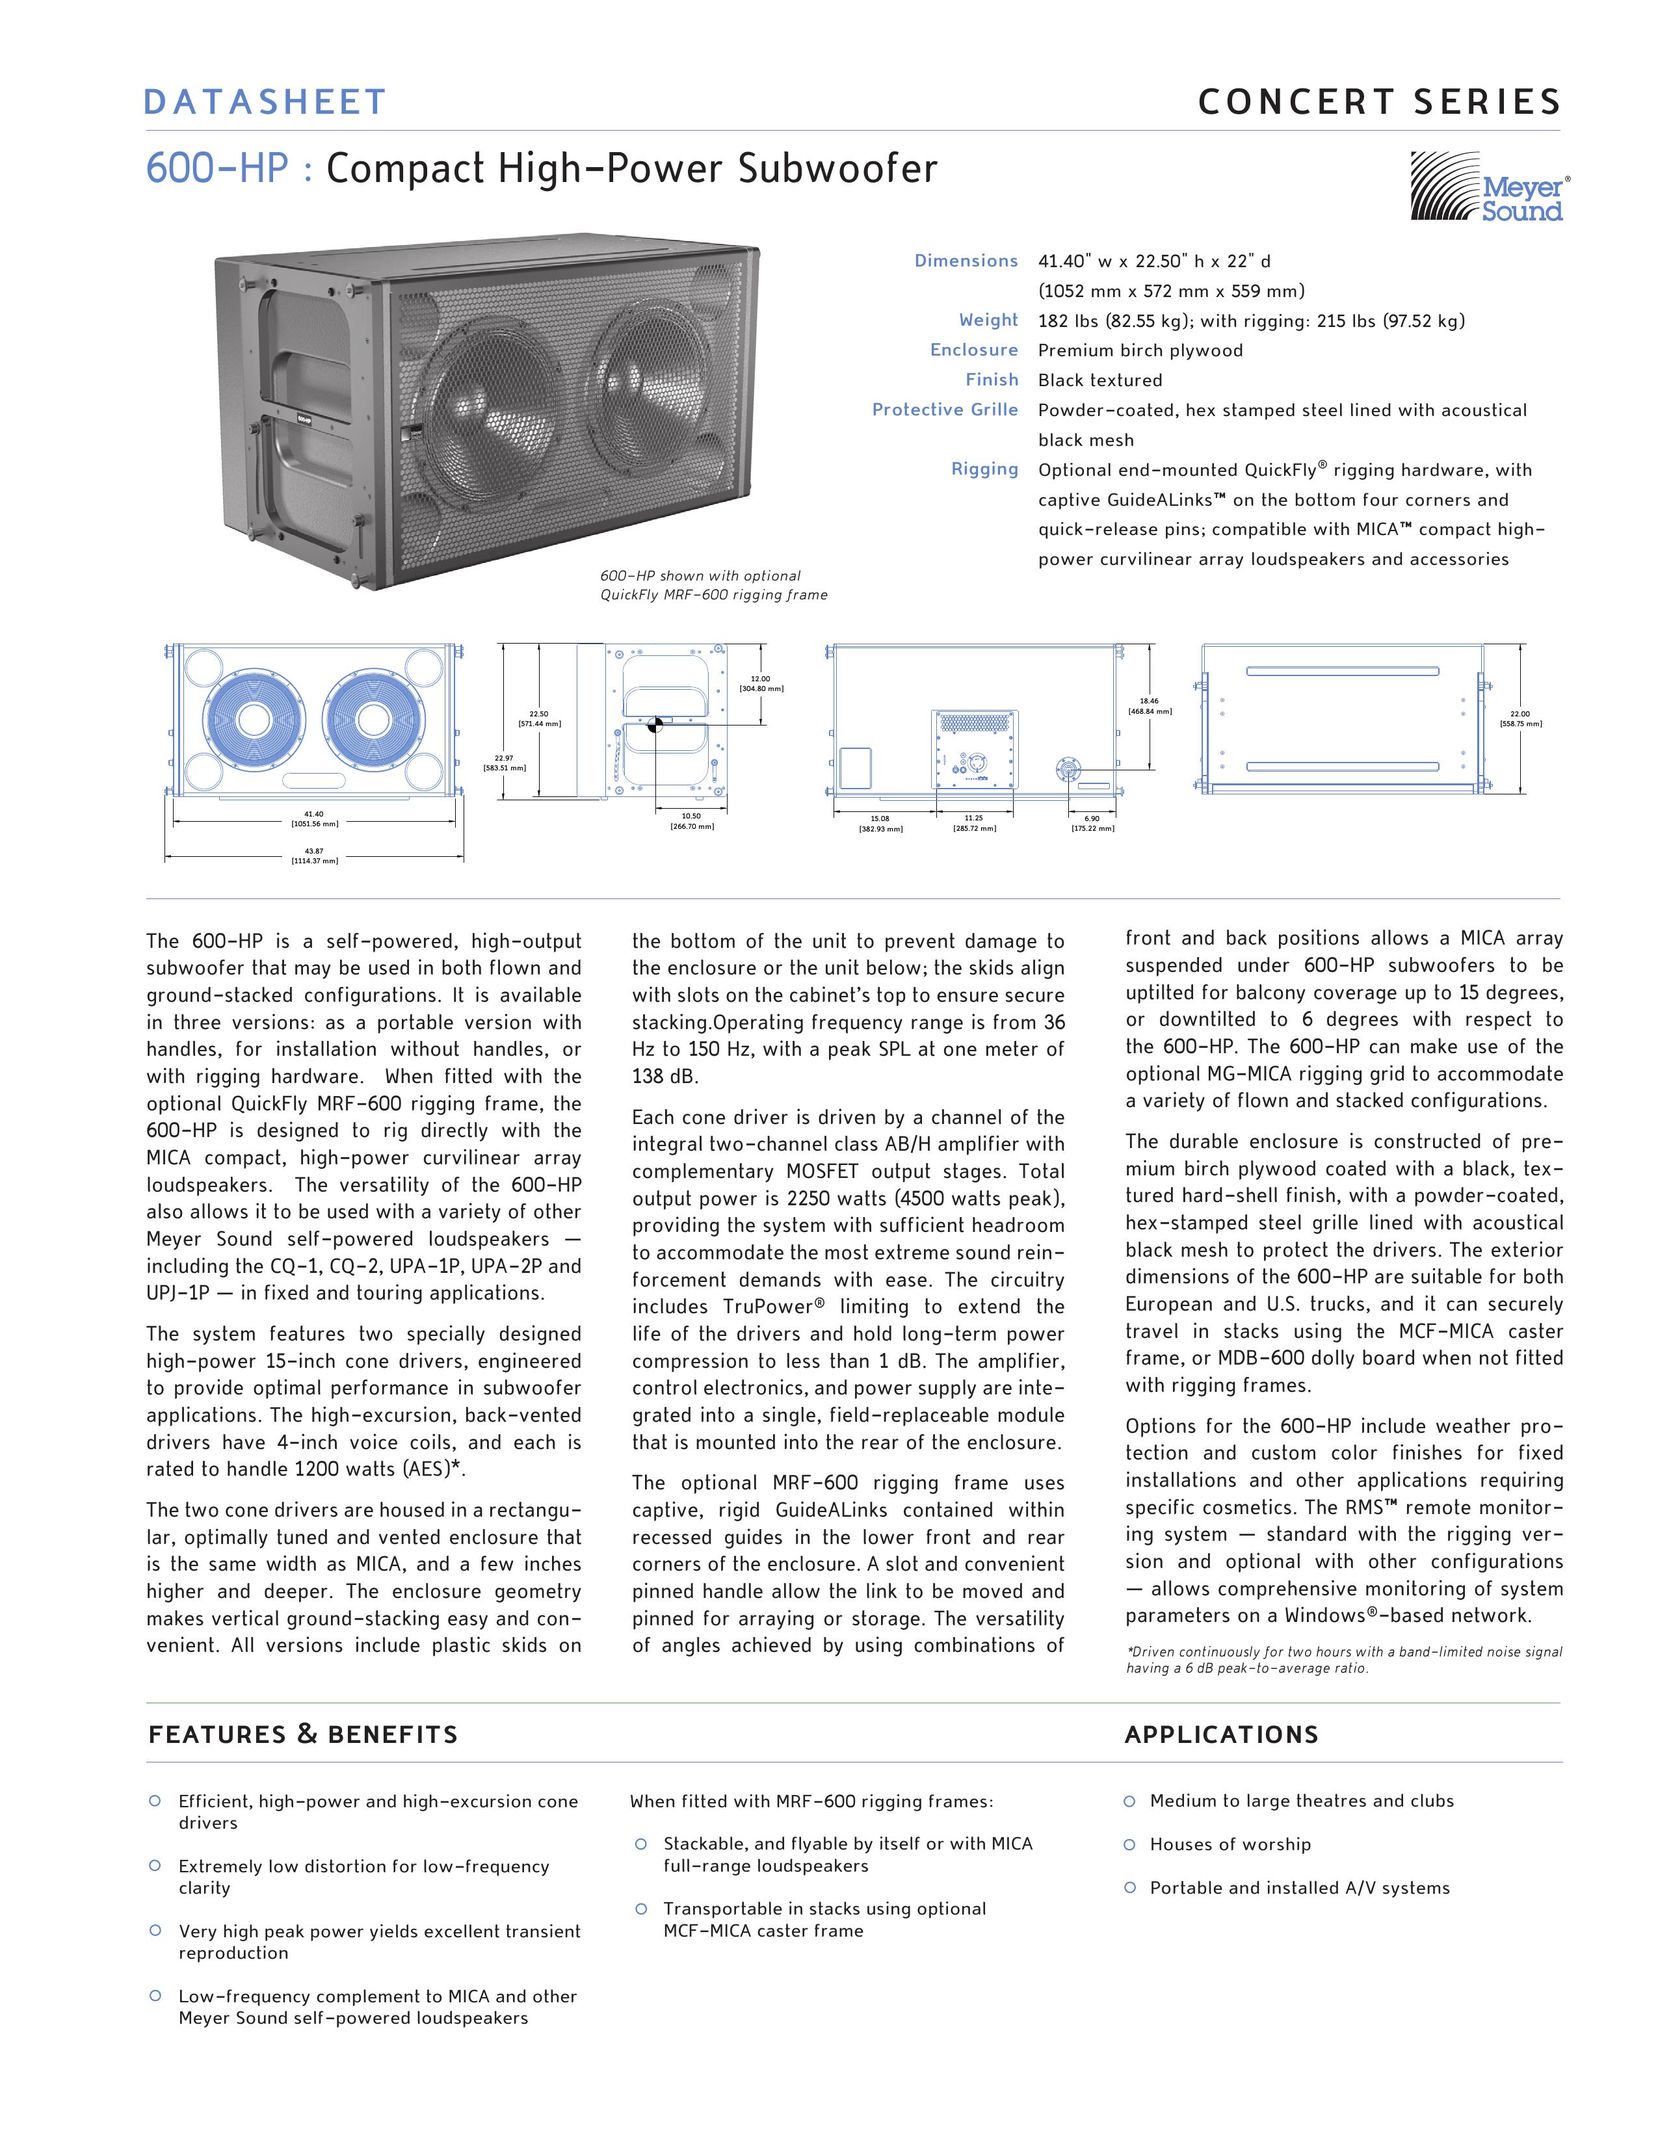 Meyer Sound 600-HP Speaker User Manual